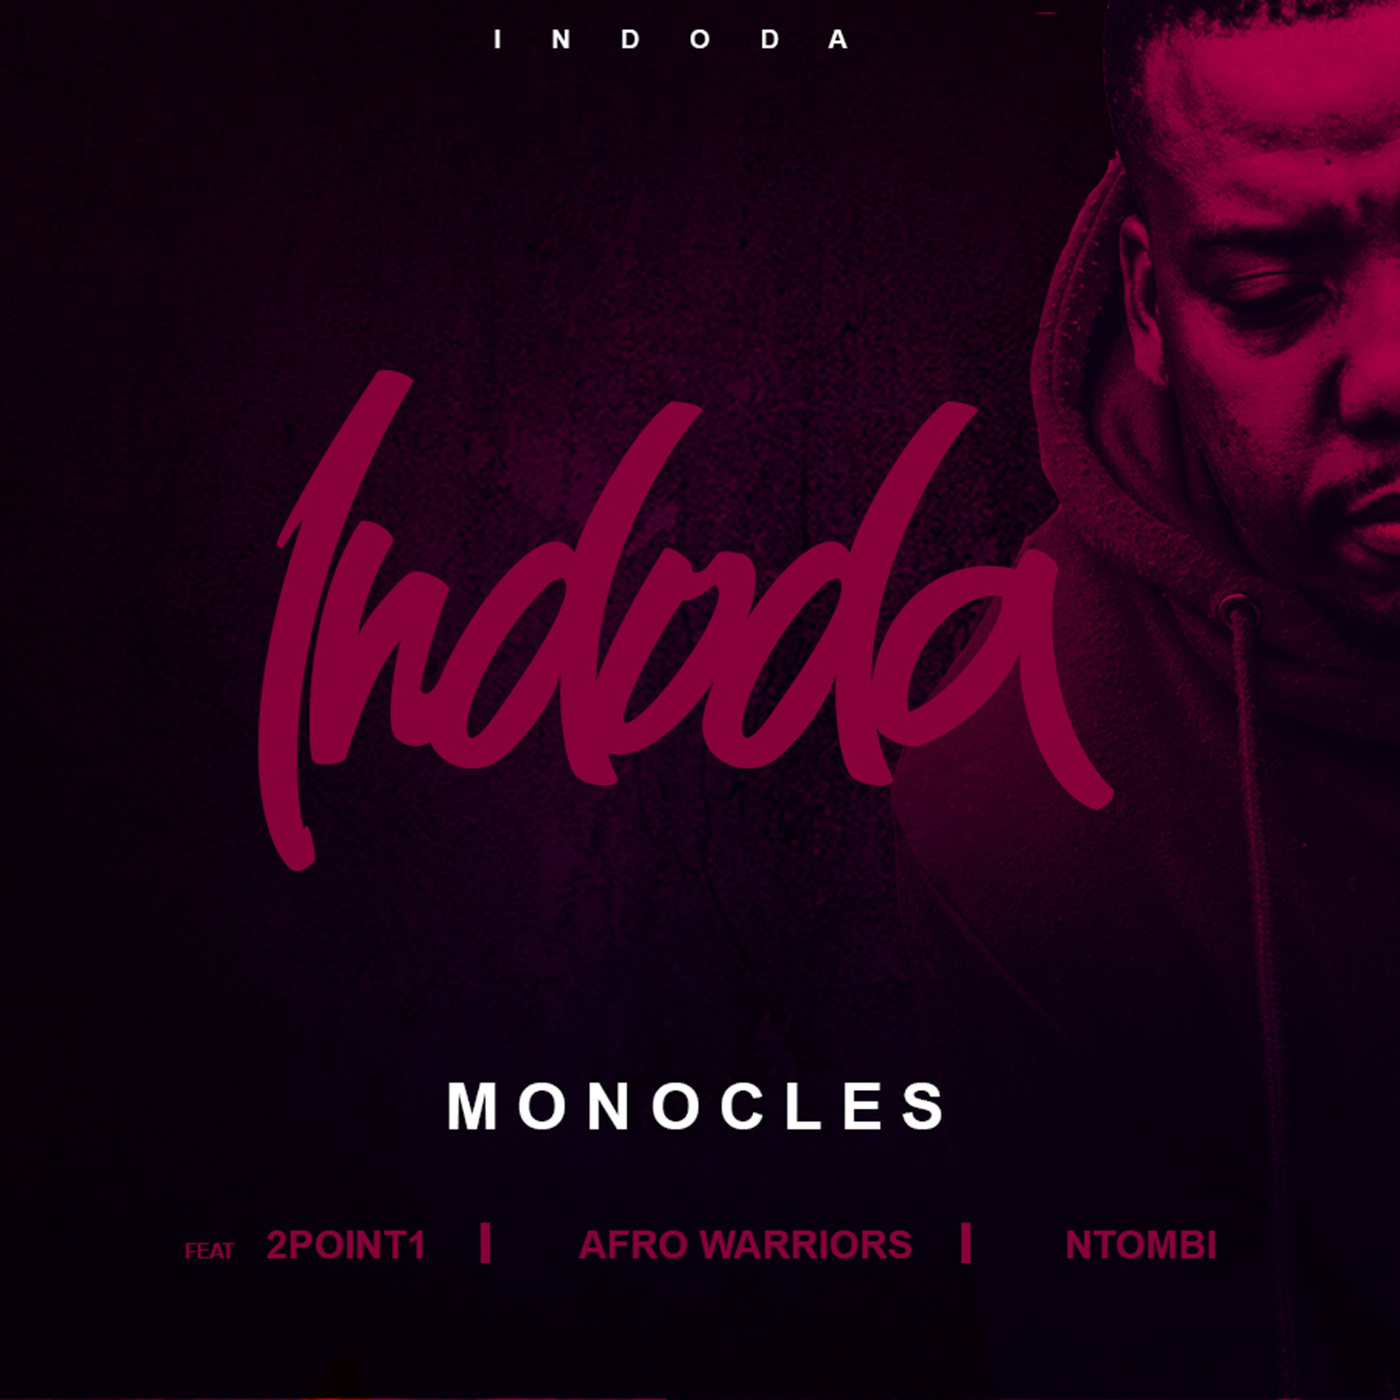 Monocles - Indoda / Sheer Sound